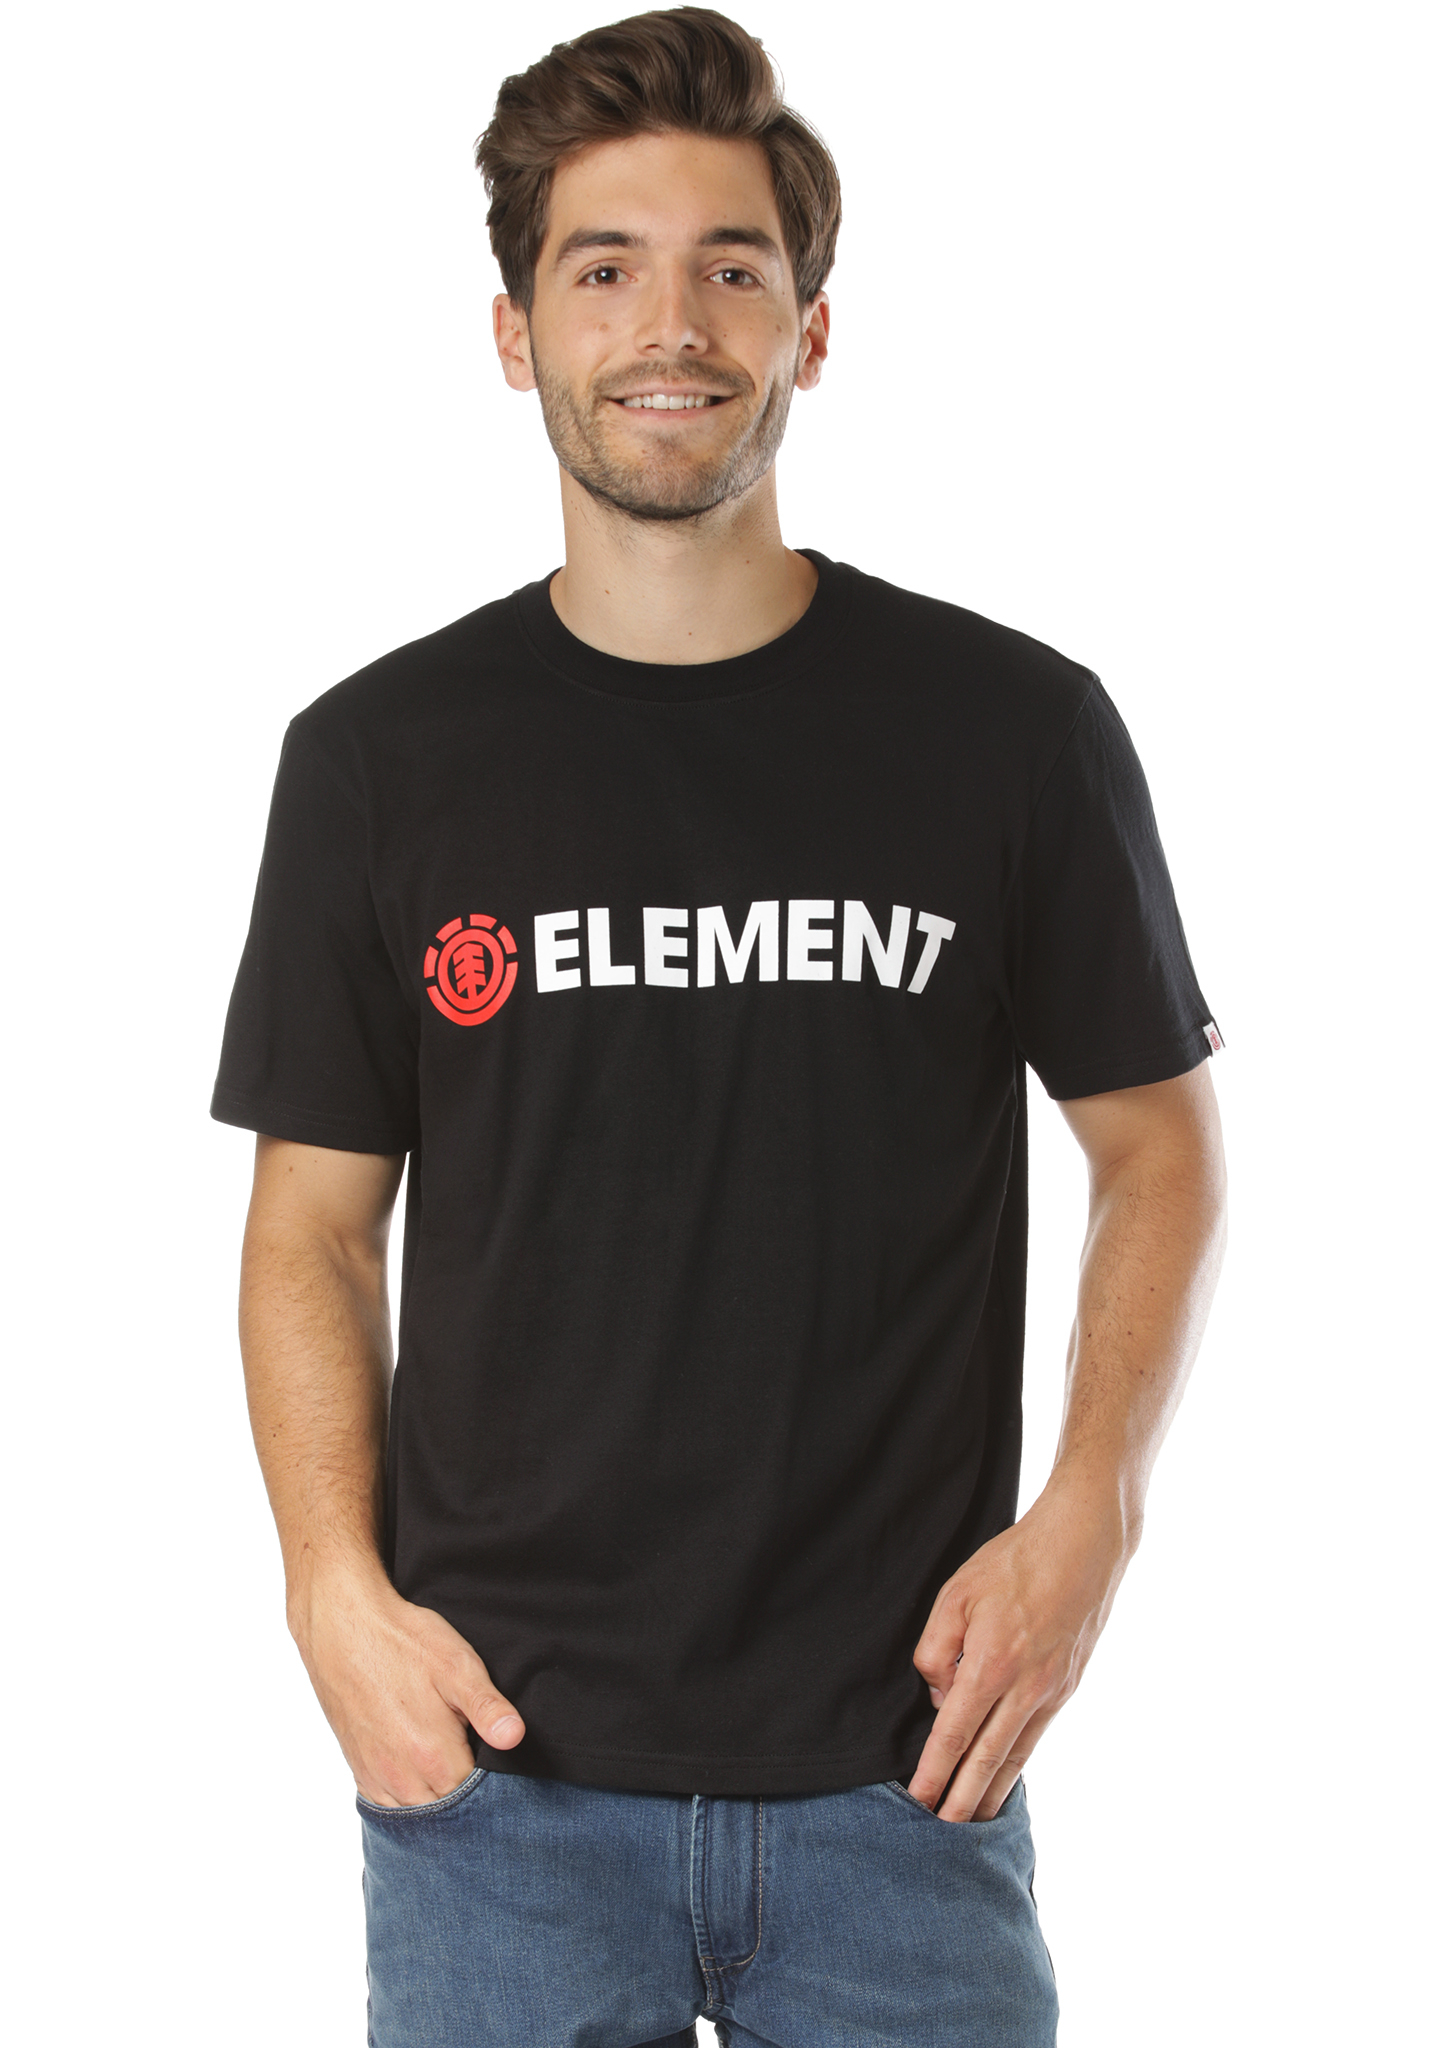 Element Blazin T-Shirt schwarz rot XXL